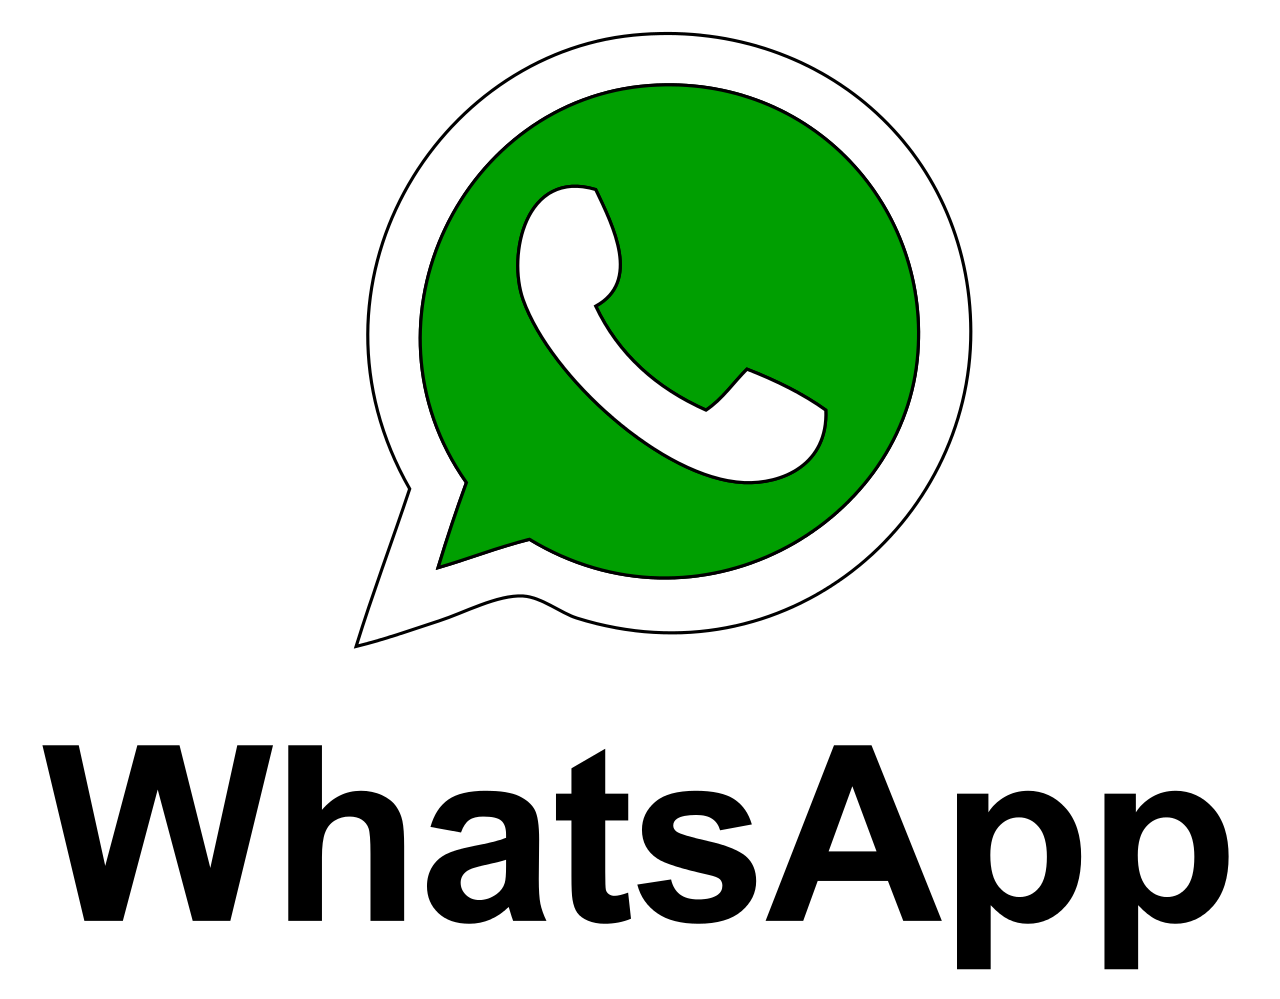 whatsapp logo 01 09